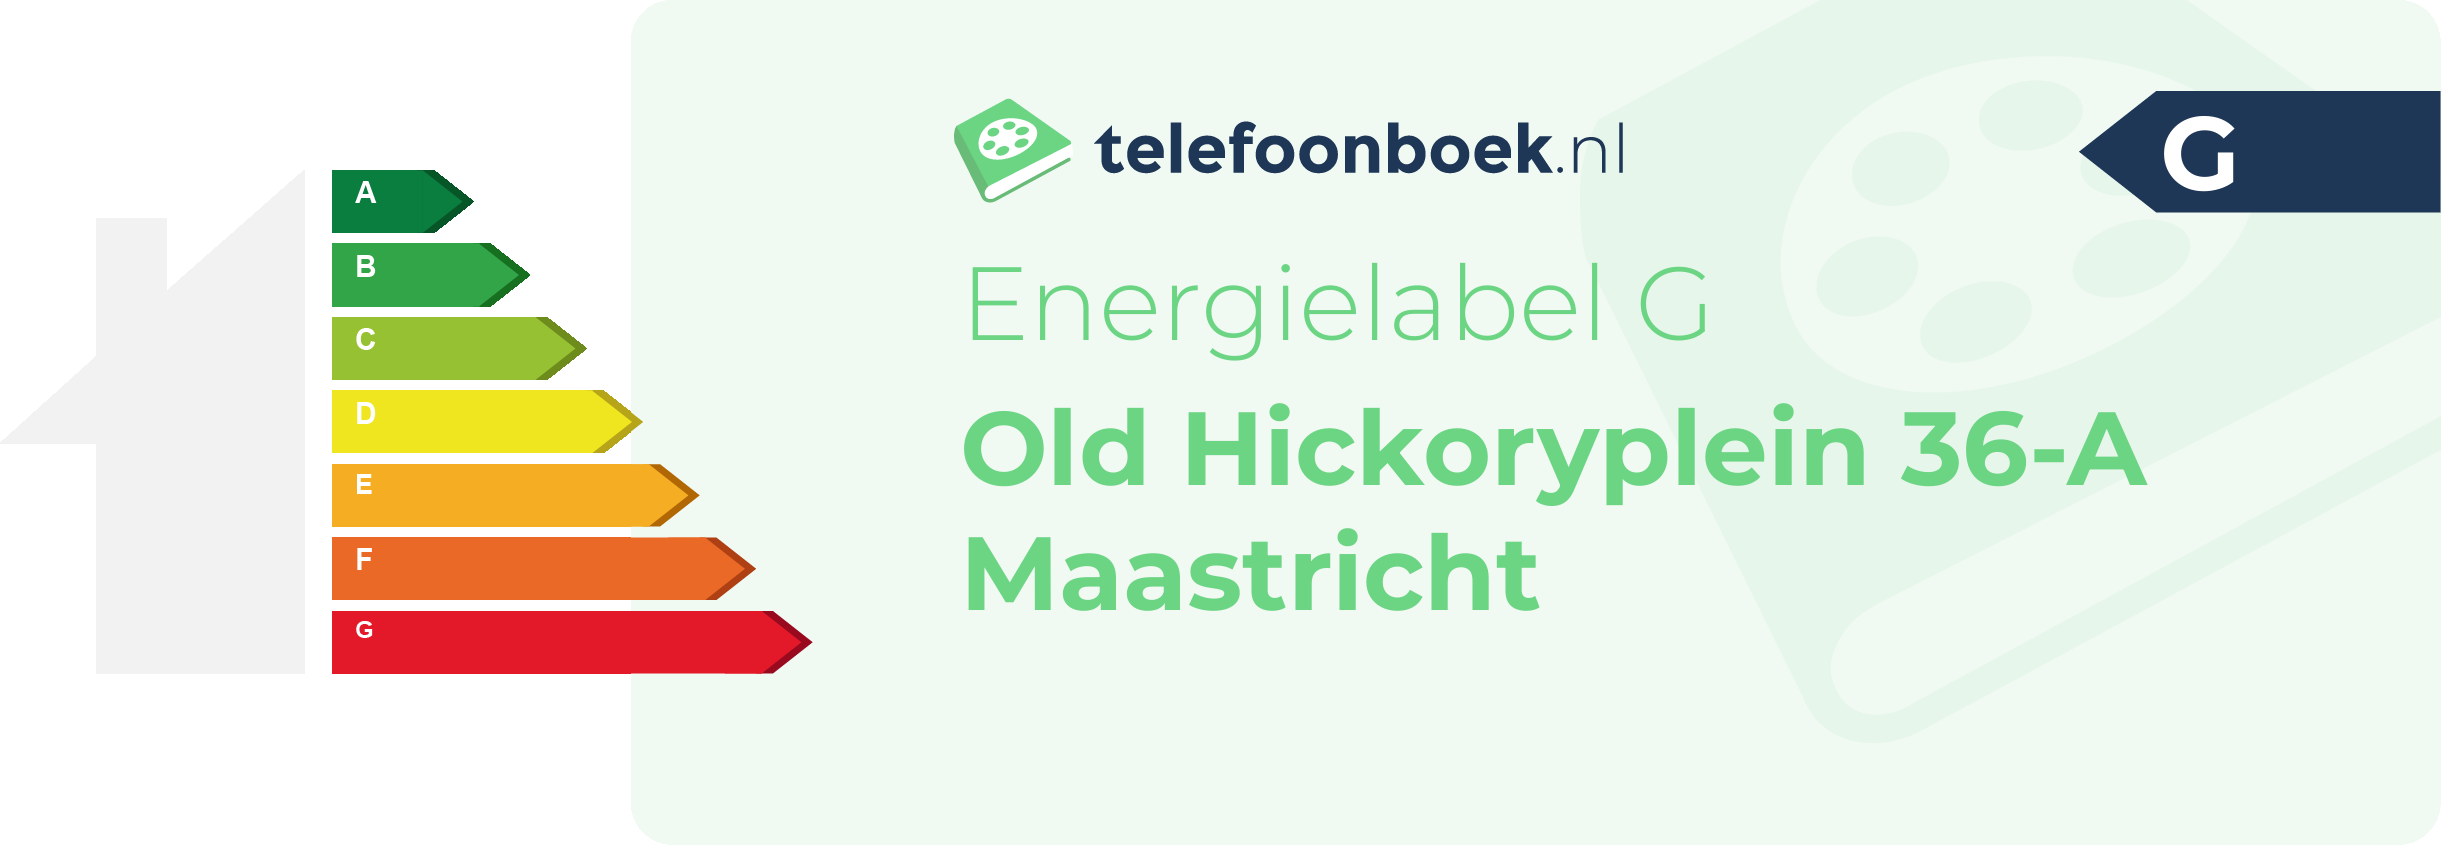 Energielabel Old Hickoryplein 36-A Maastricht